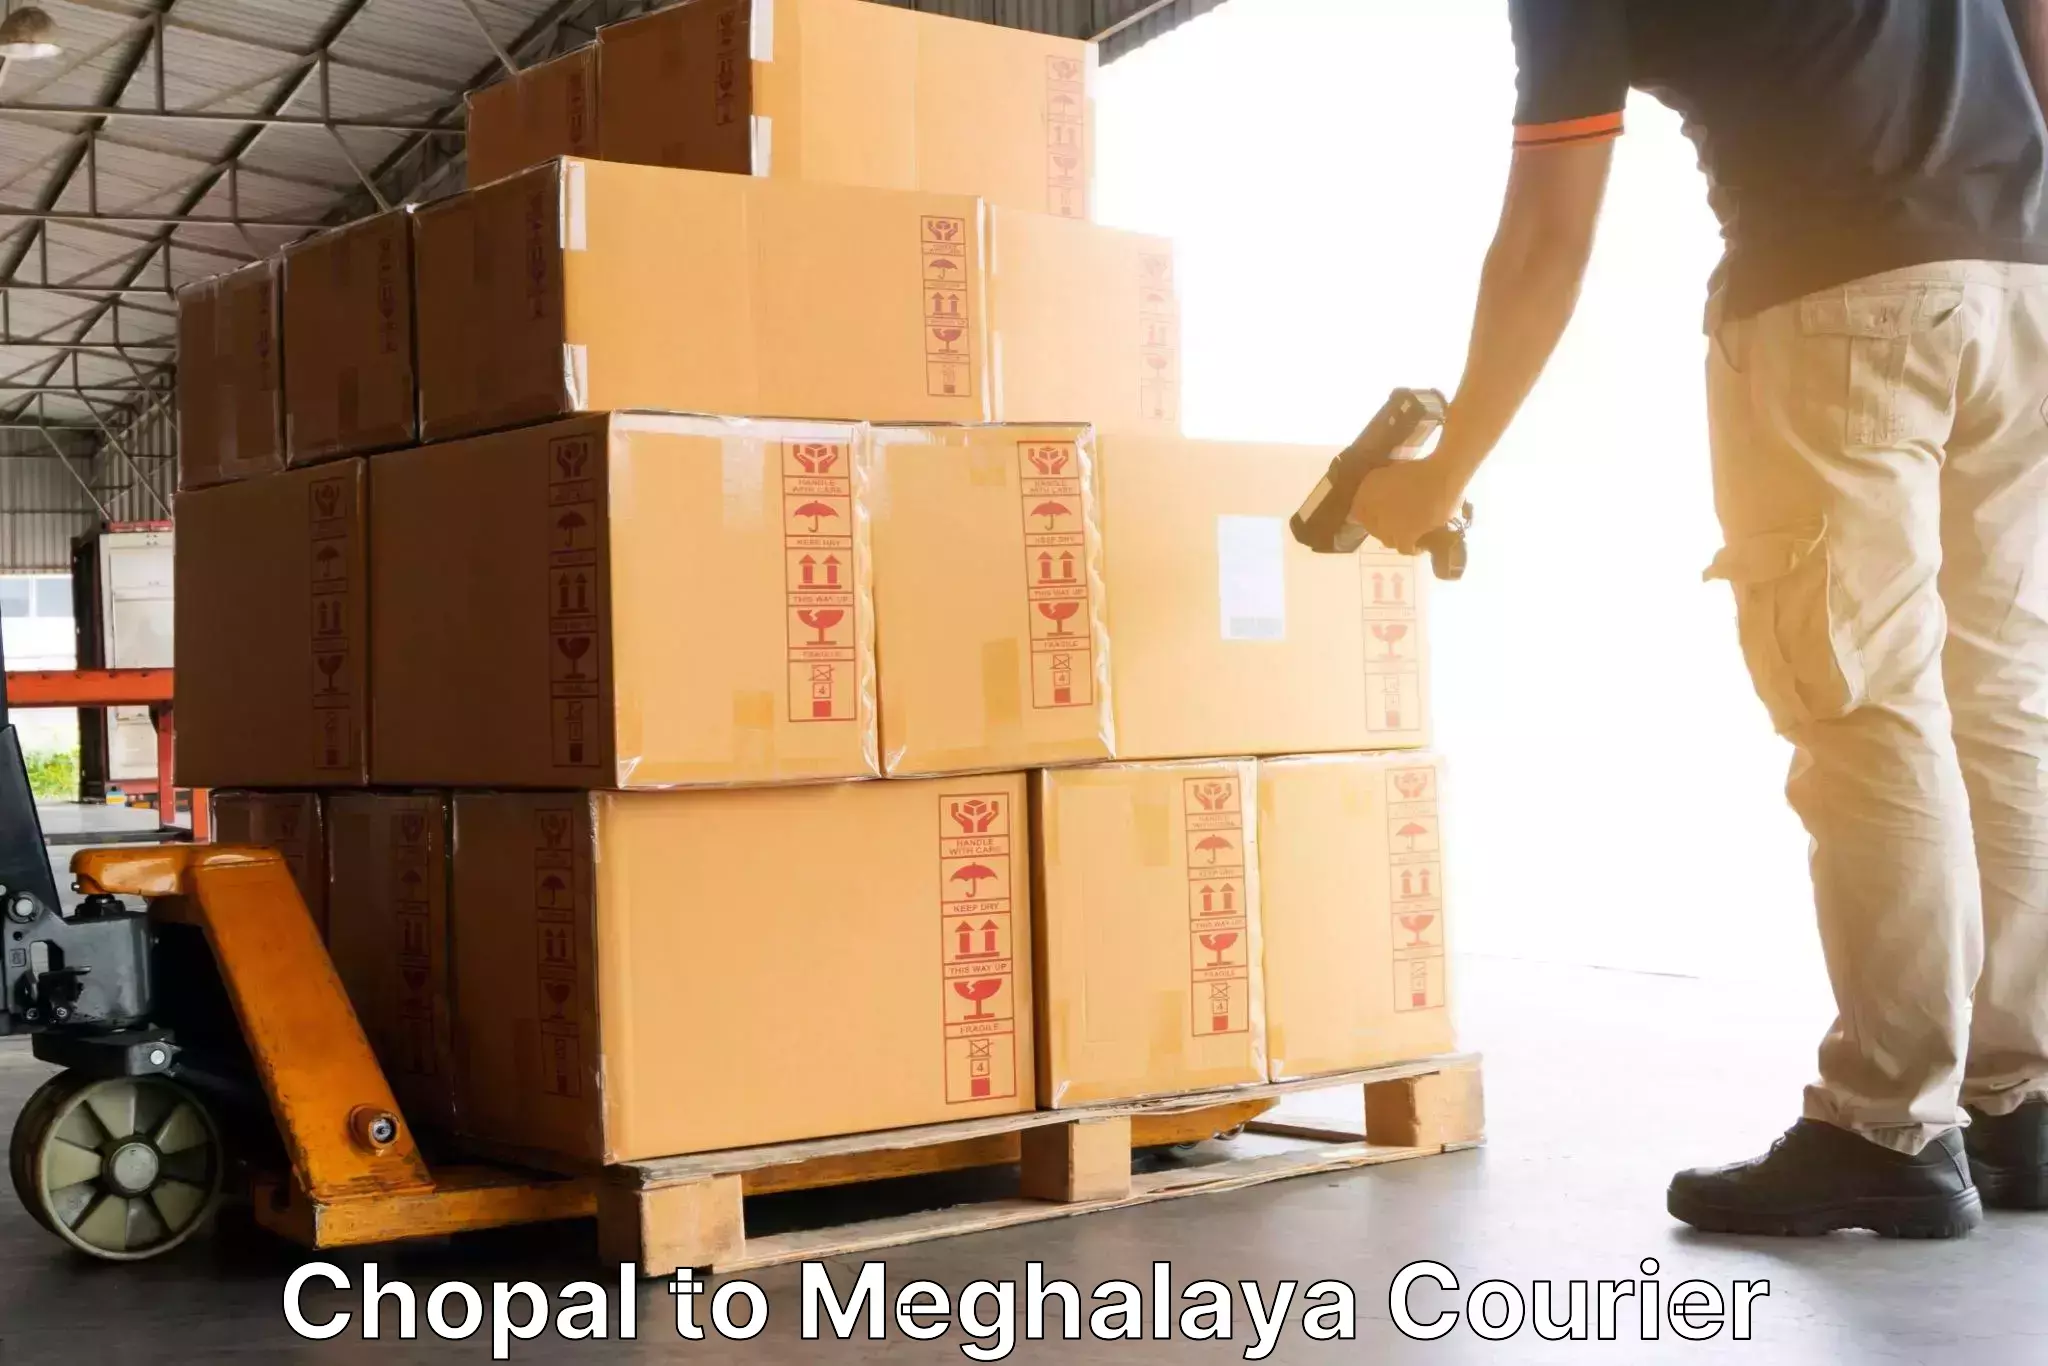 Courier service comparison in Chopal to Tikrikilla